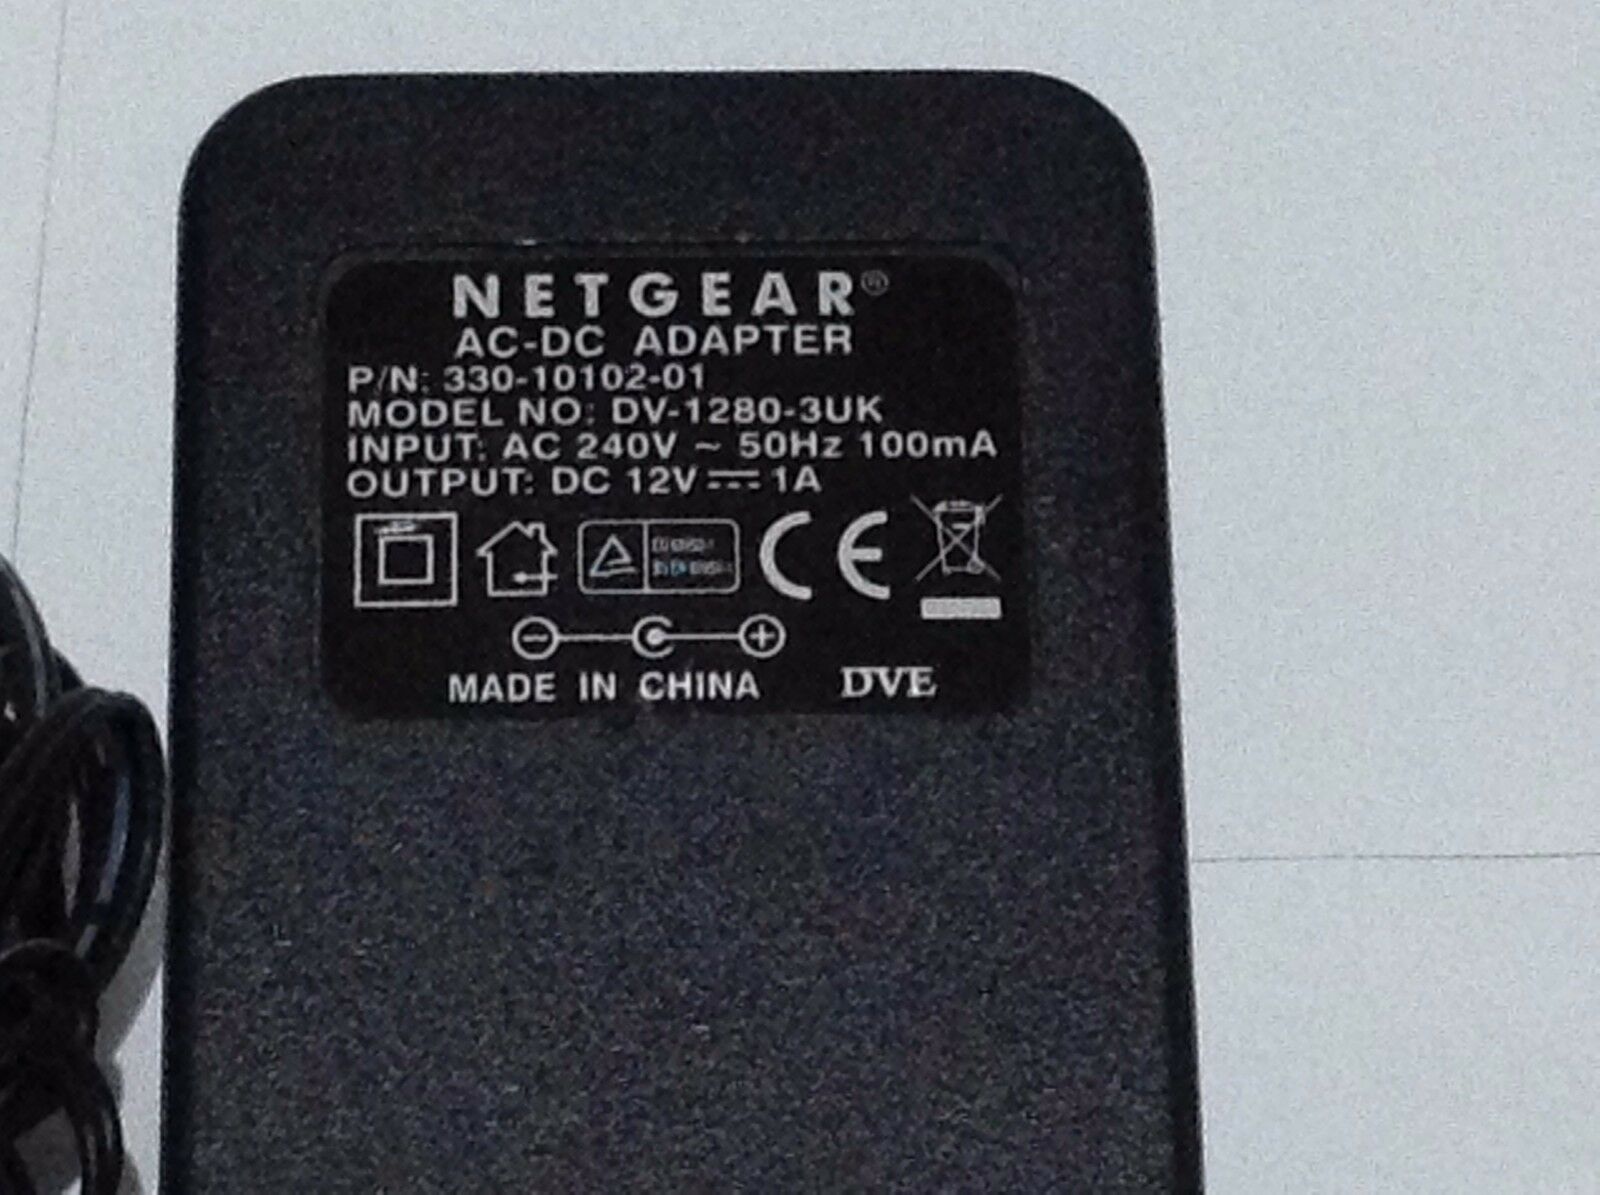 New NETGEAR 330-10102-01 DV-1280-3UK AC/DC ADAPTER FOR NETGEAR ROUTERS 12V 1A REF: T781